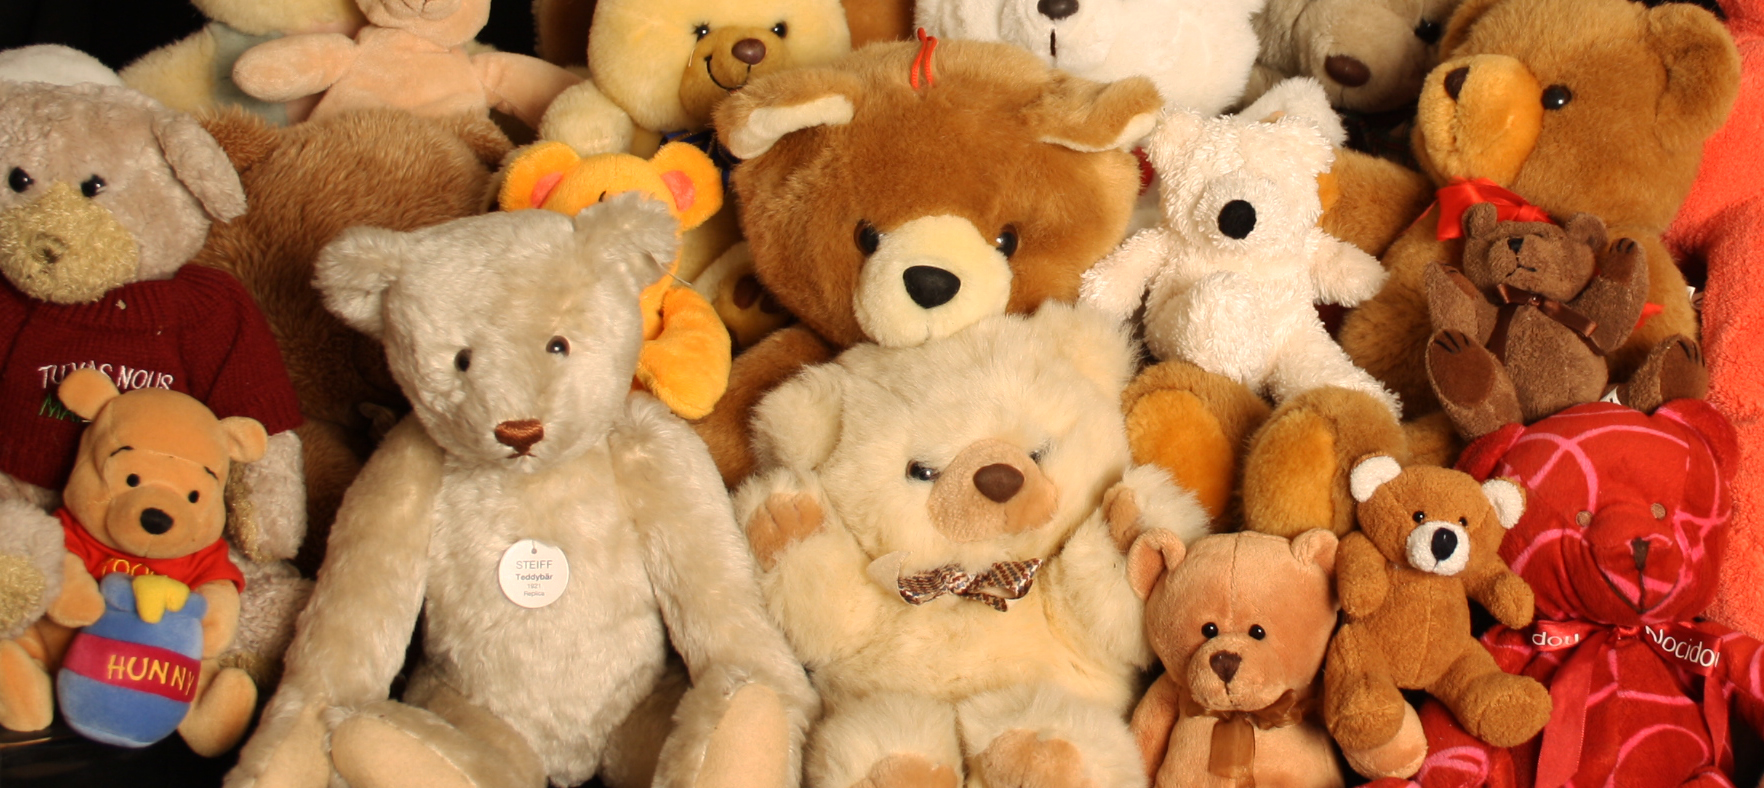 where can i find teddy bears